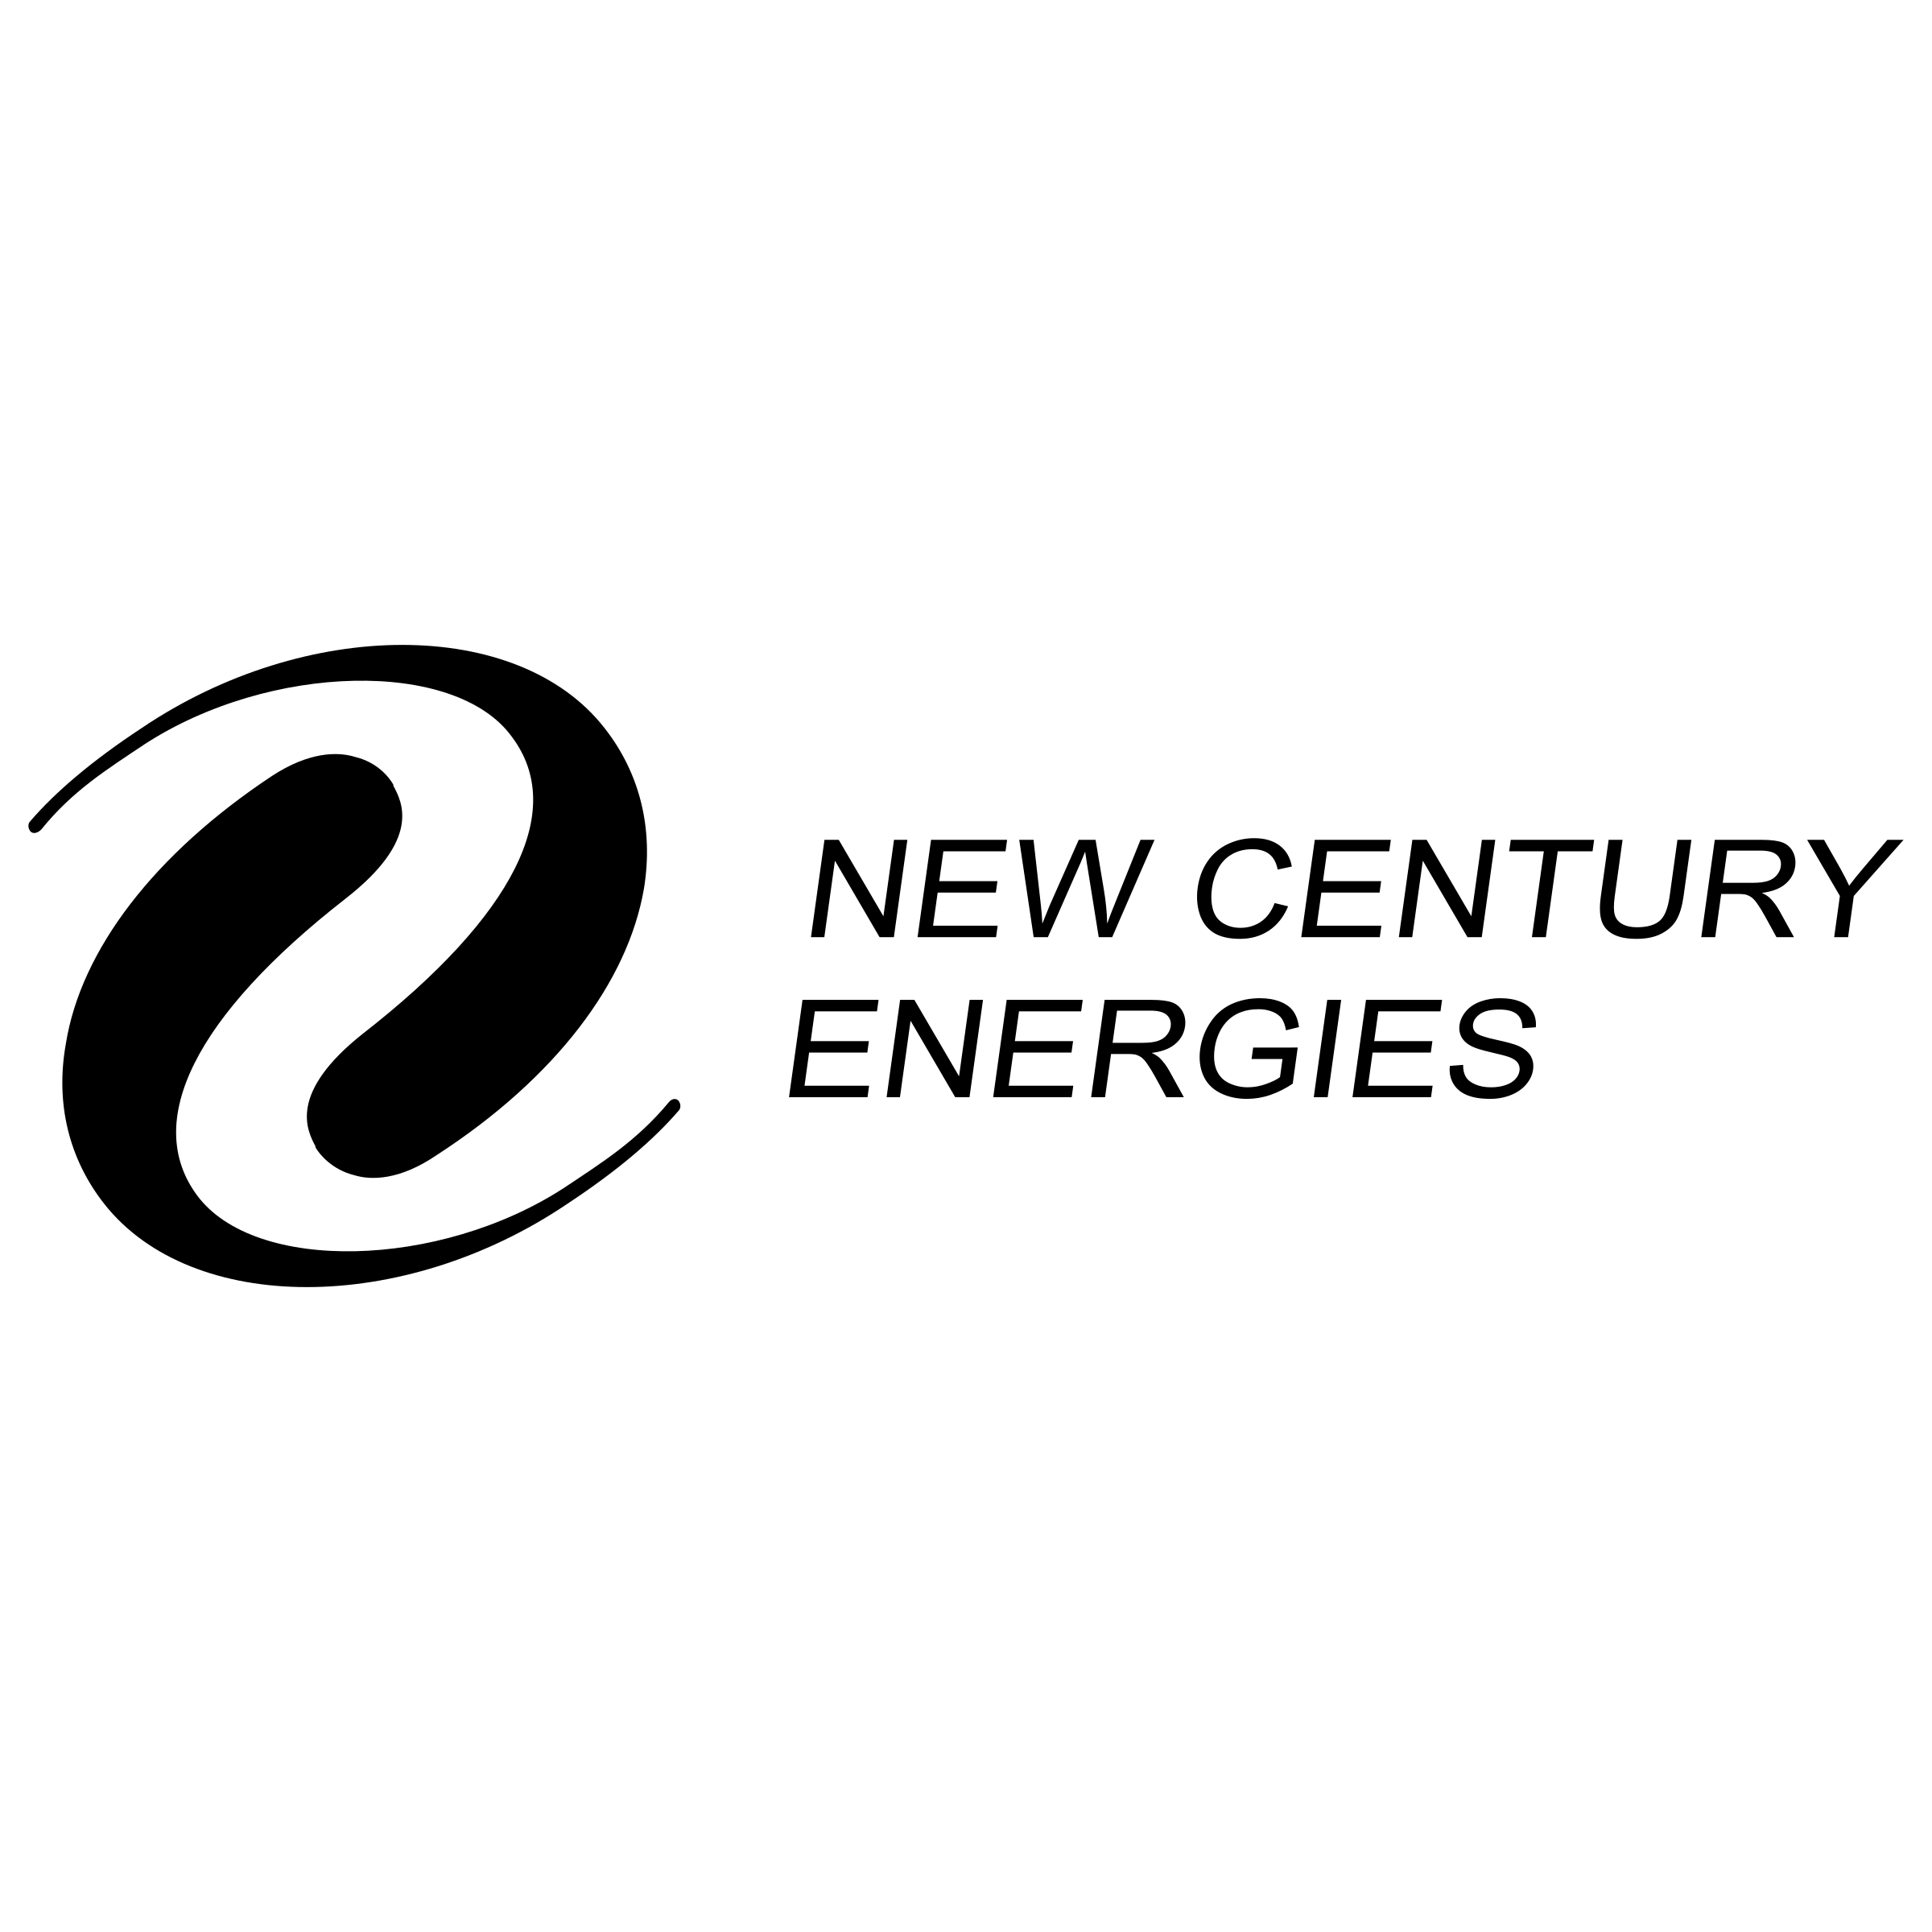 New Century Logo - New Century Energies Logo PNG Transparent & SVG Vector - Freebie Supply